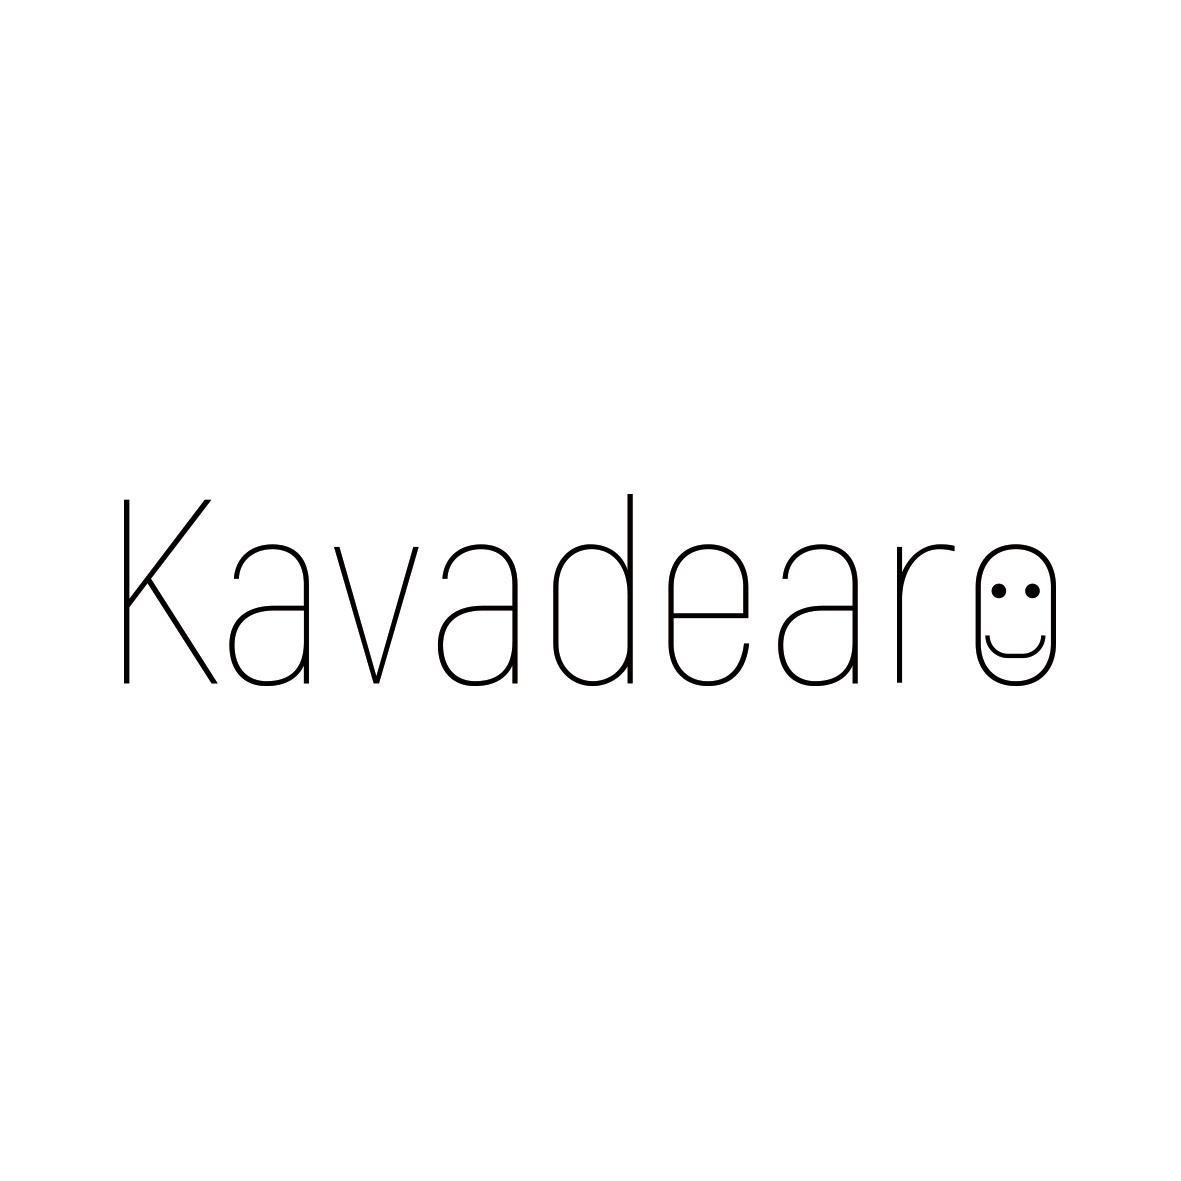 KAVADEARO商标转让